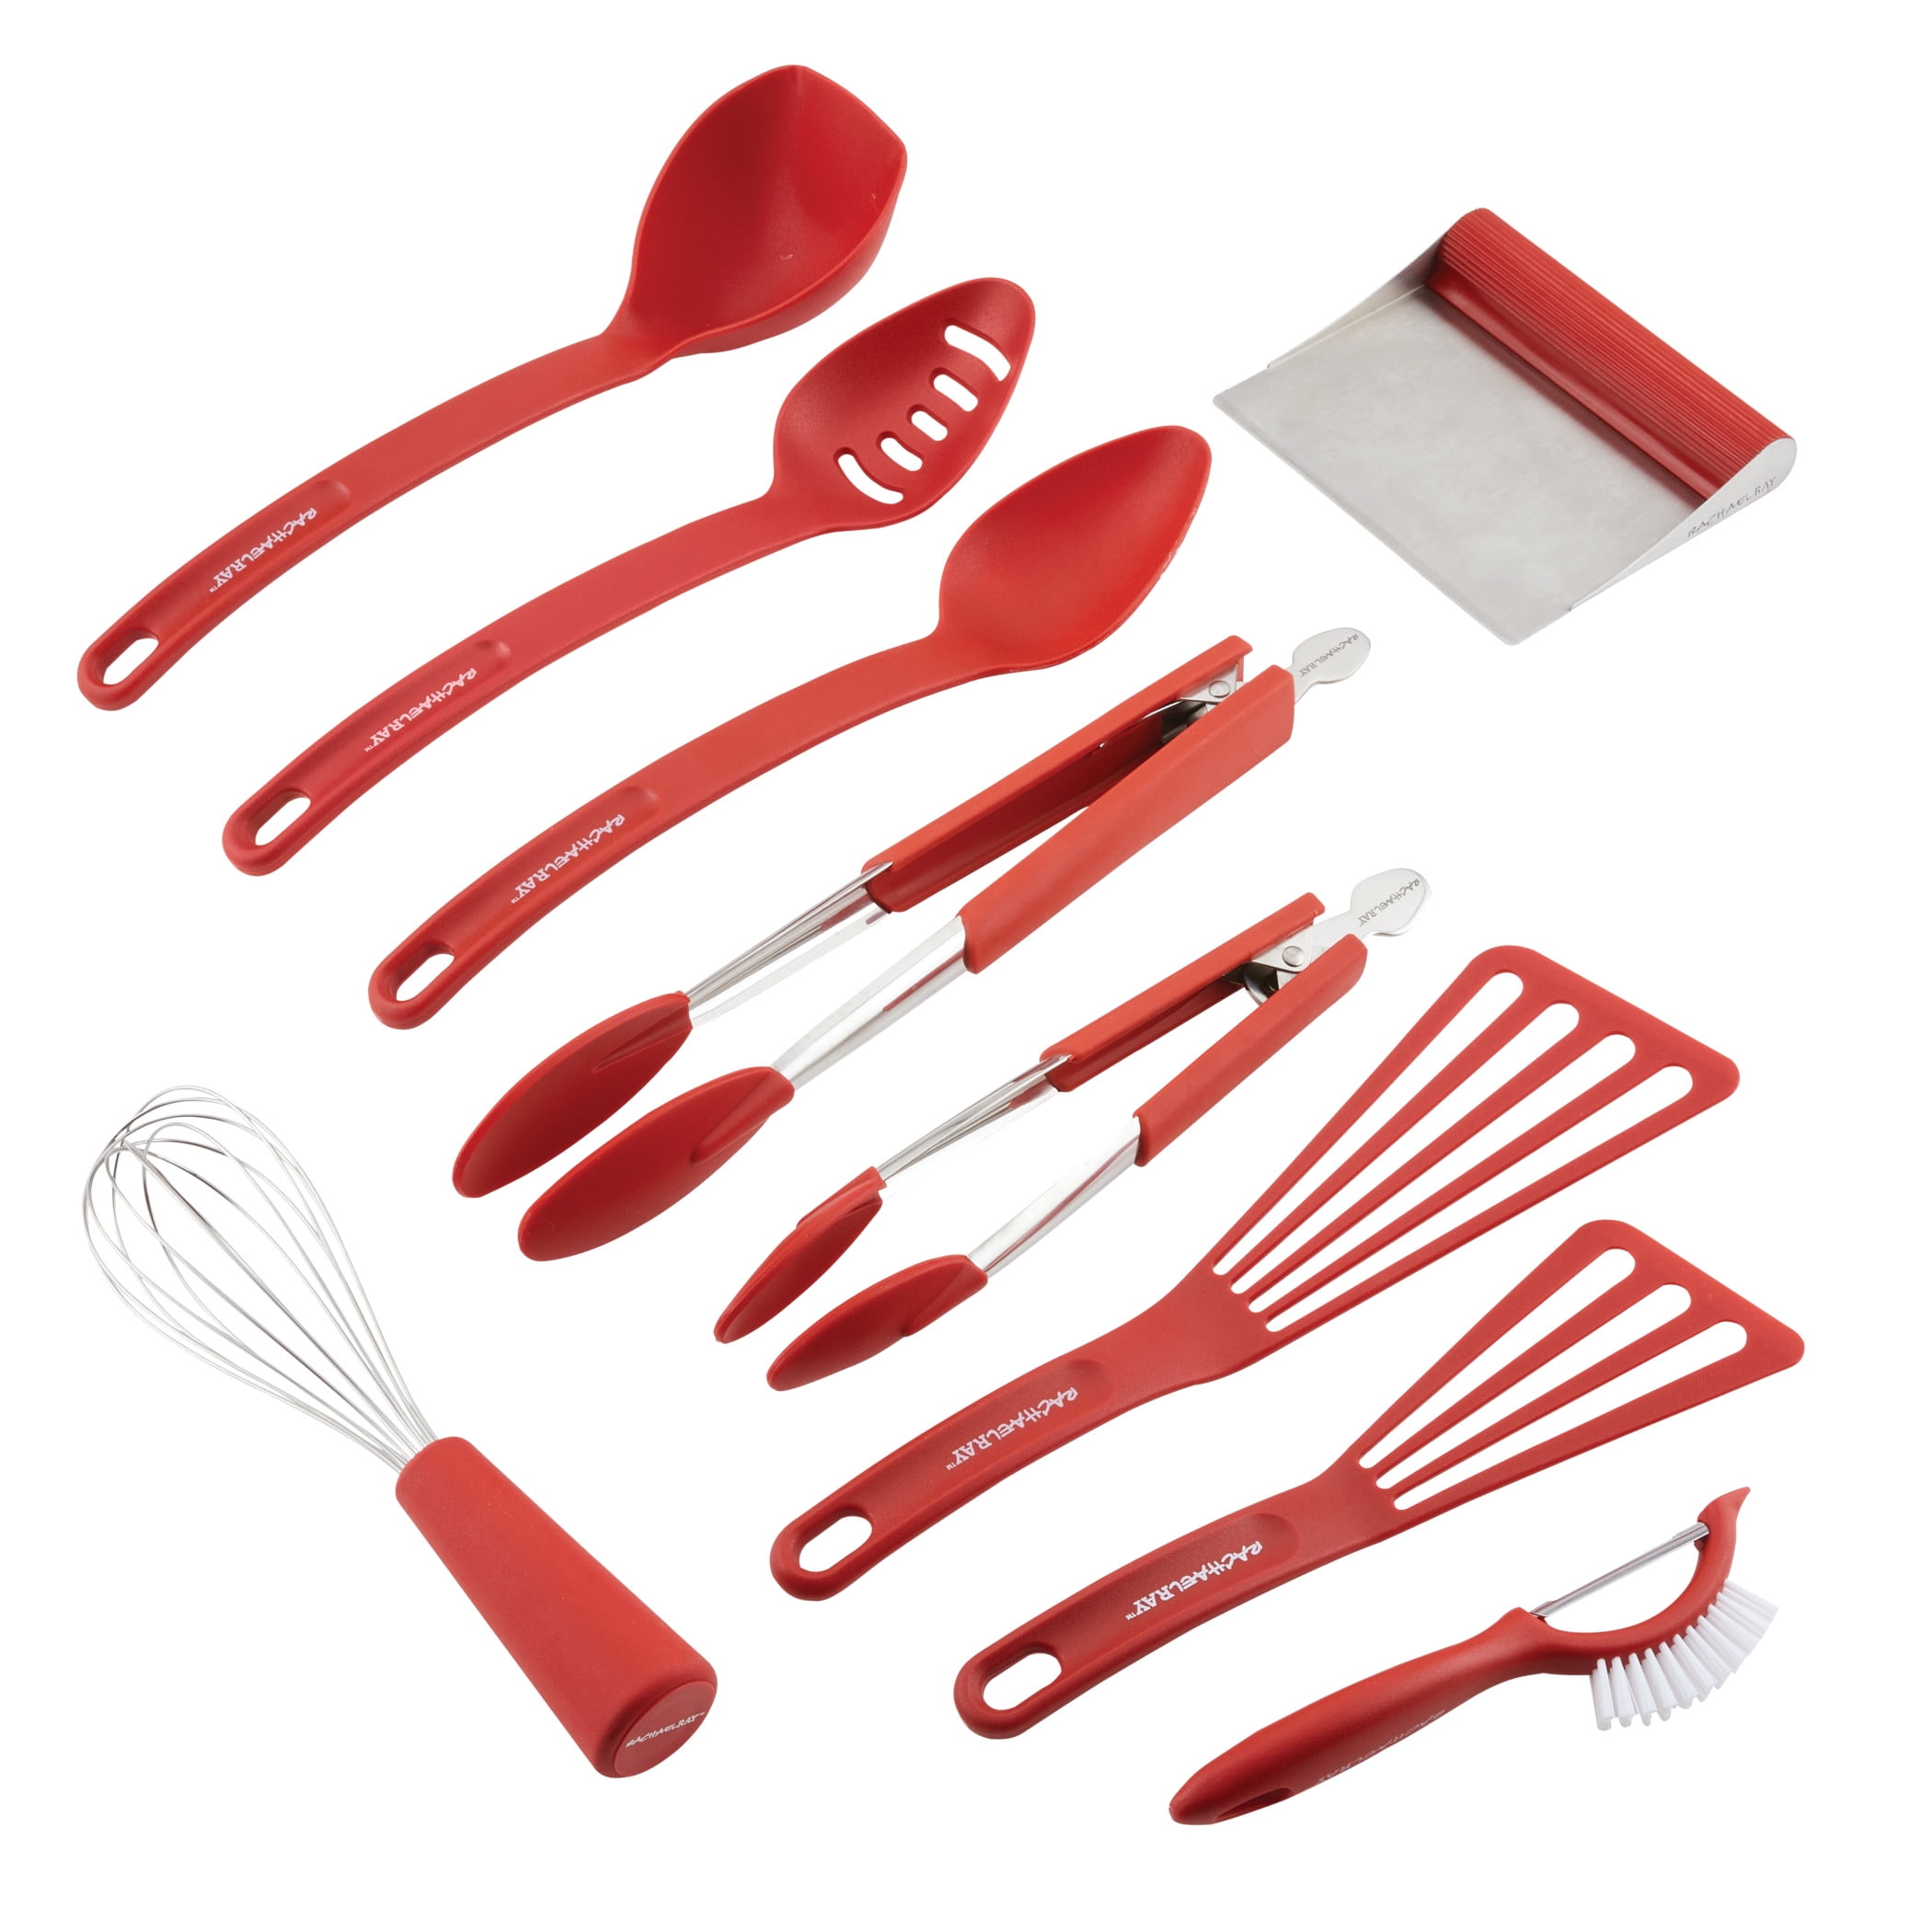 Rachael Ray Hard Anodized II Nonstick Dishwasher Safe 10-Piece Cookware Set  (Orange) + 6-Piece Kitchen Tool Set (Orange)